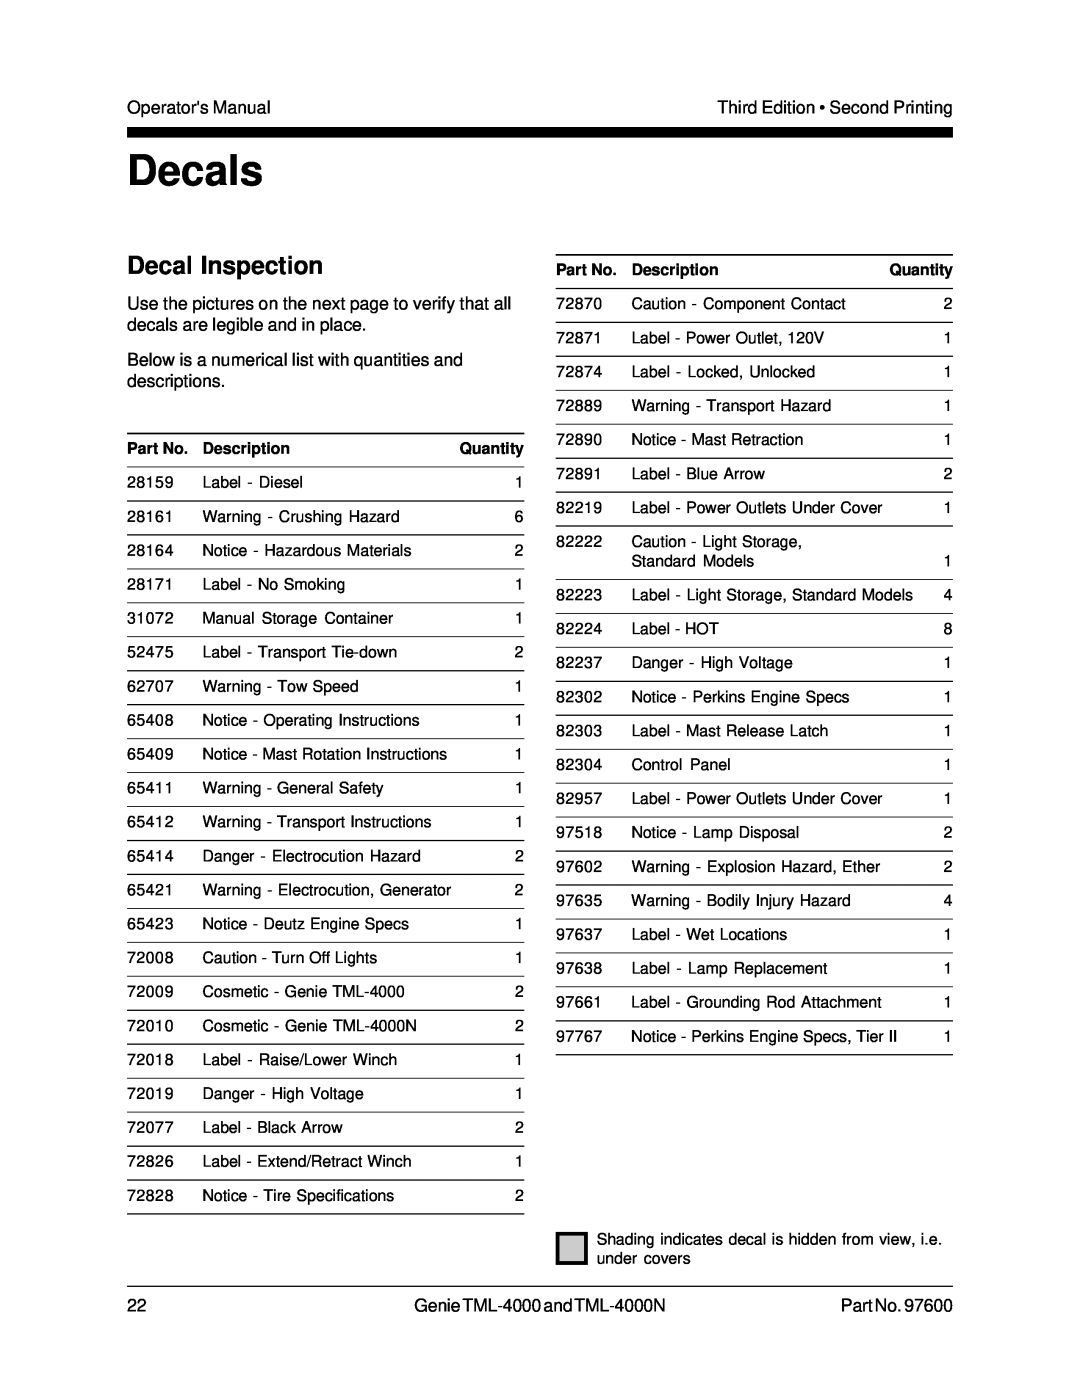 Genie TML-4000N manual Decals, Decal Inspection, Description, Quantity 